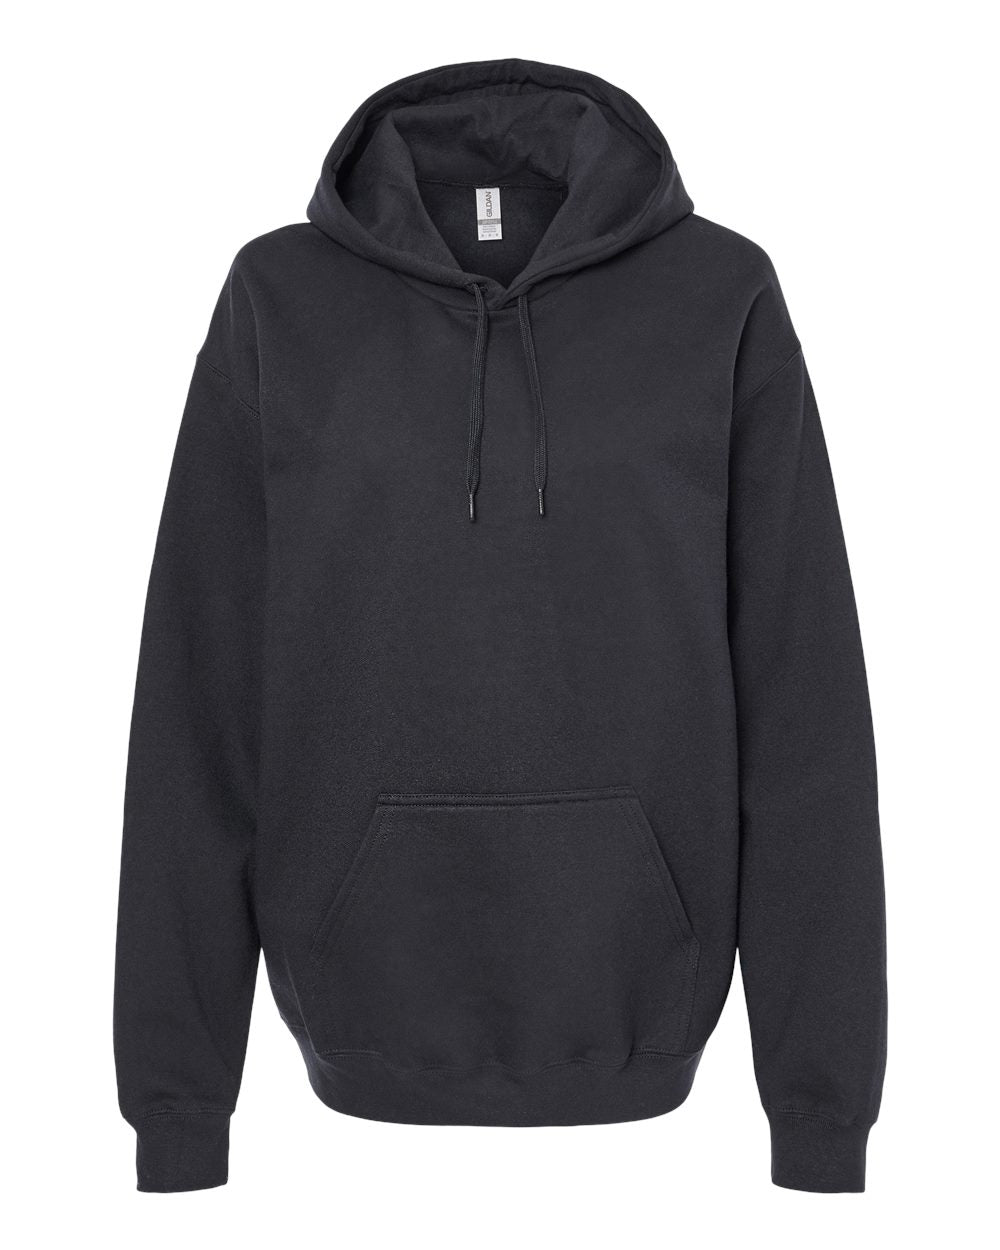 Pretreated Gildan SF500 Softstyle Hooded Sweatshirt - Black